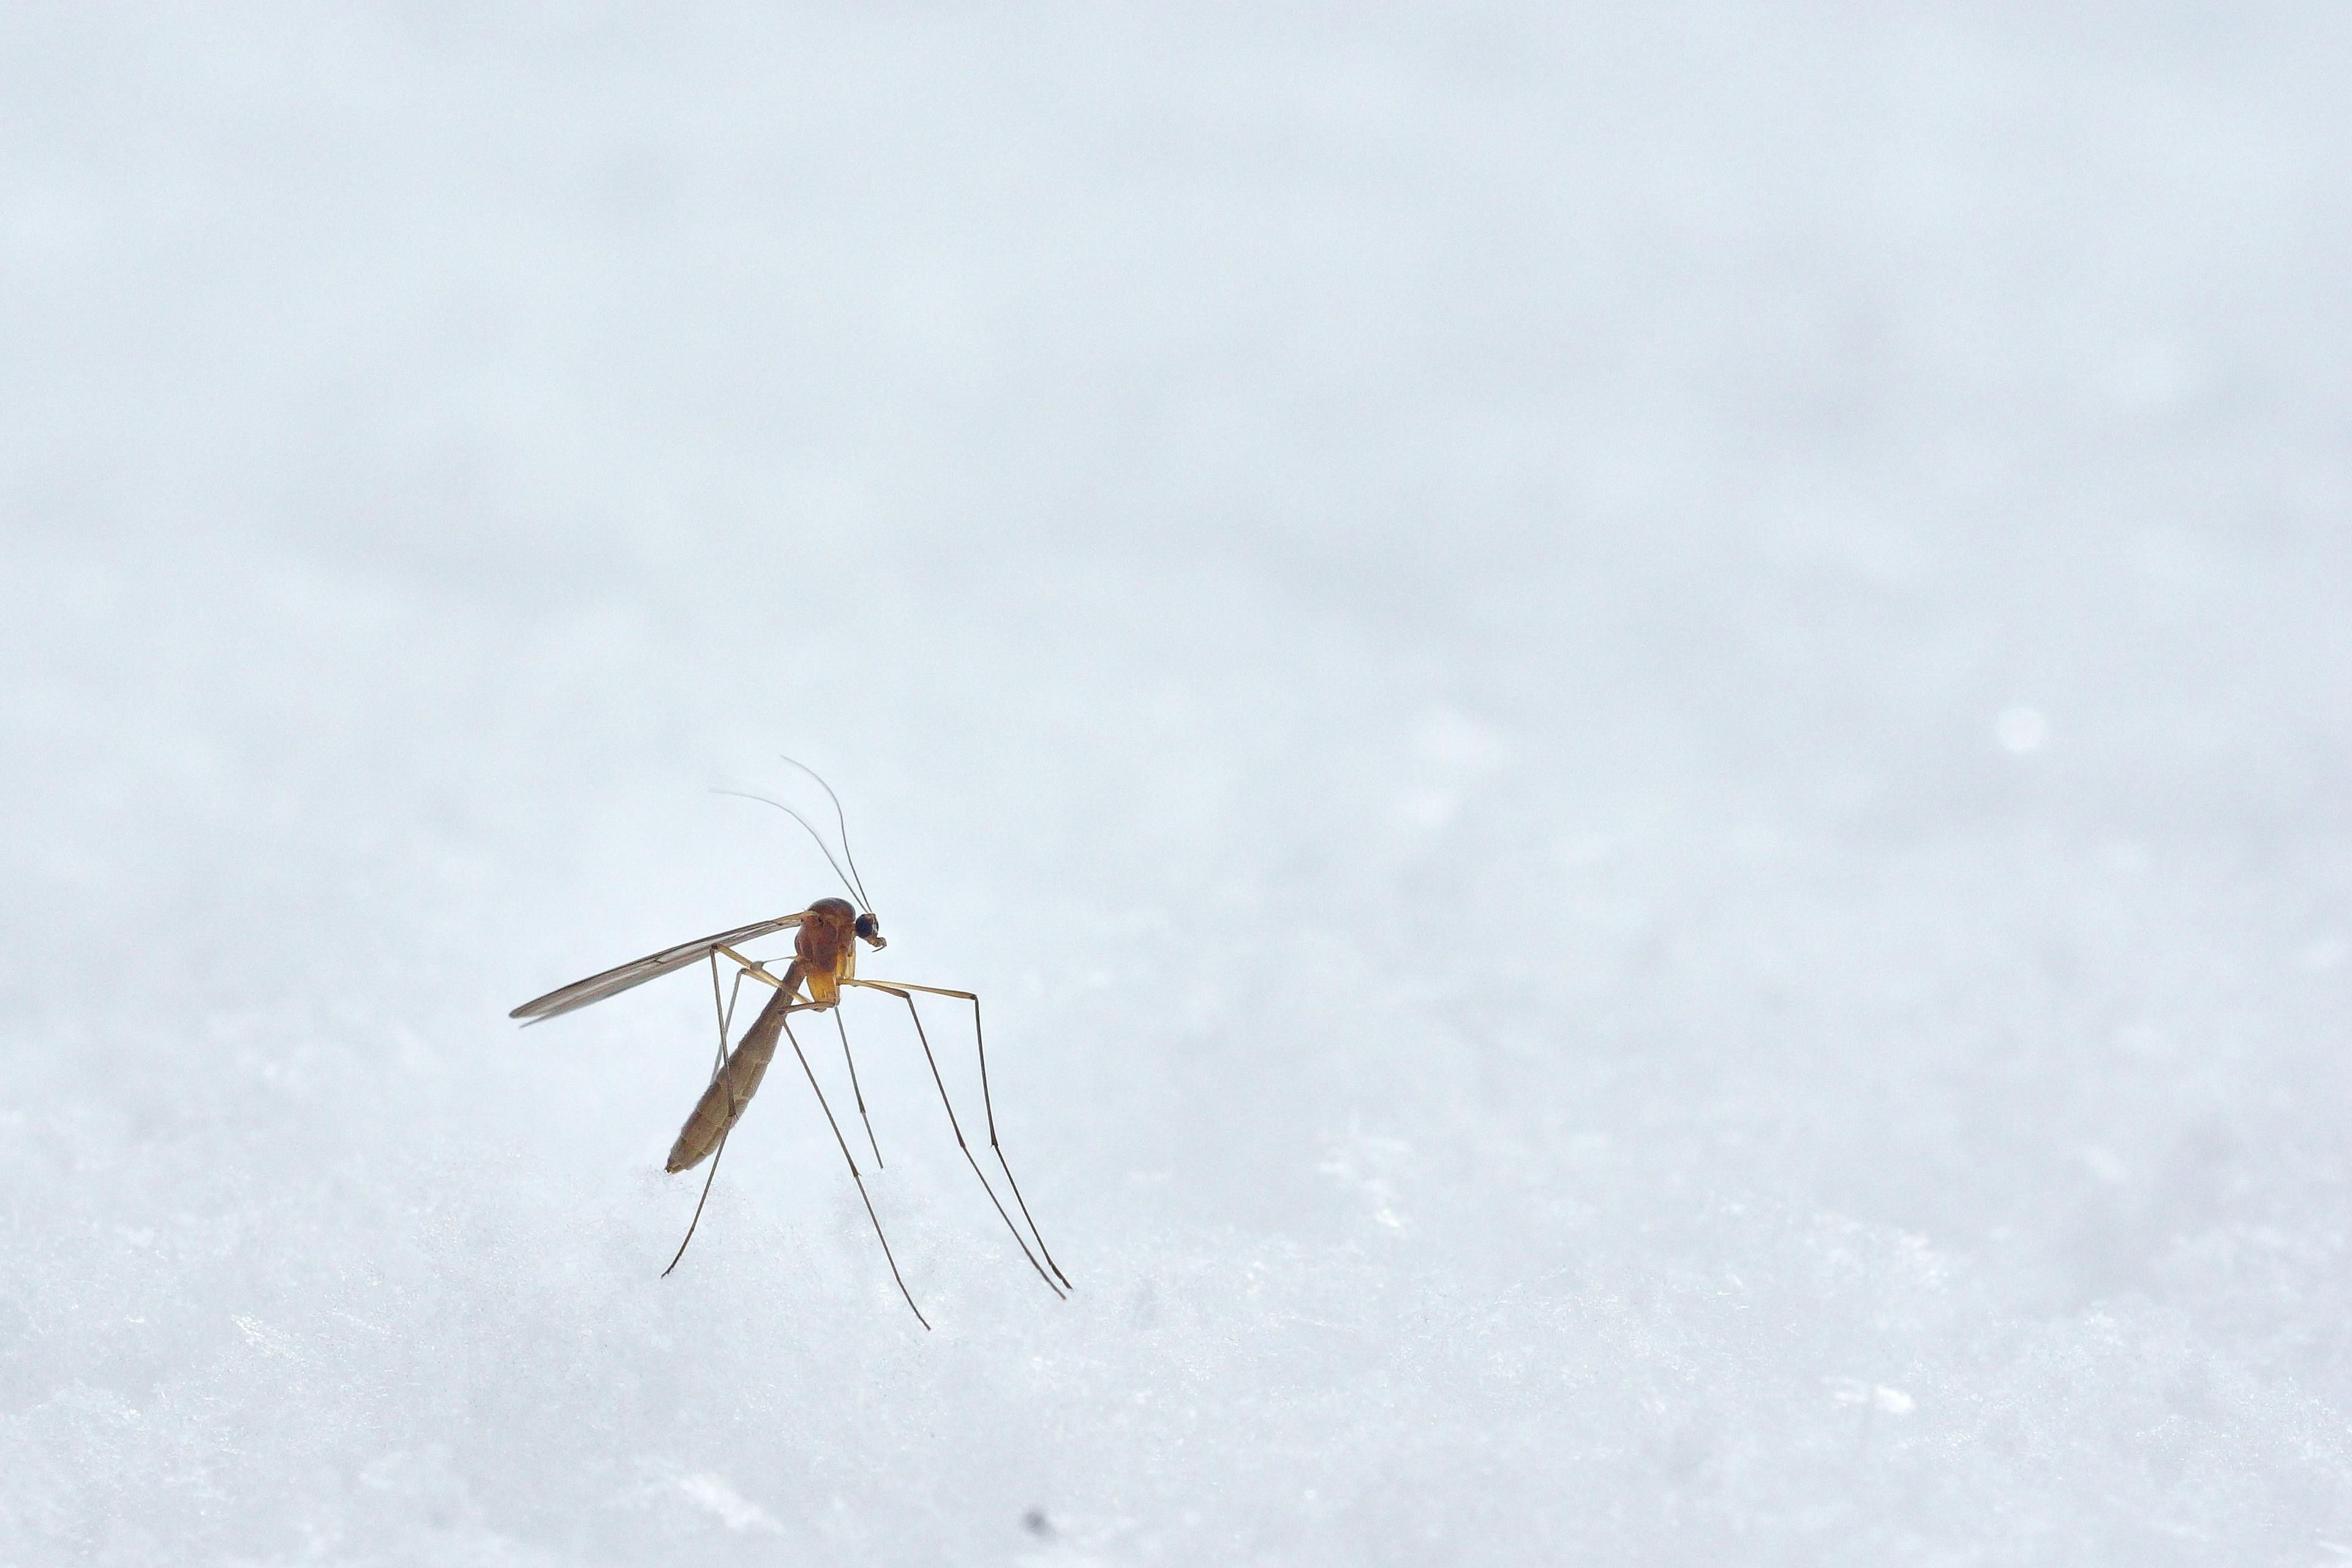 Long-Acting Monoclonal Antibody Could Protect Against Malaria